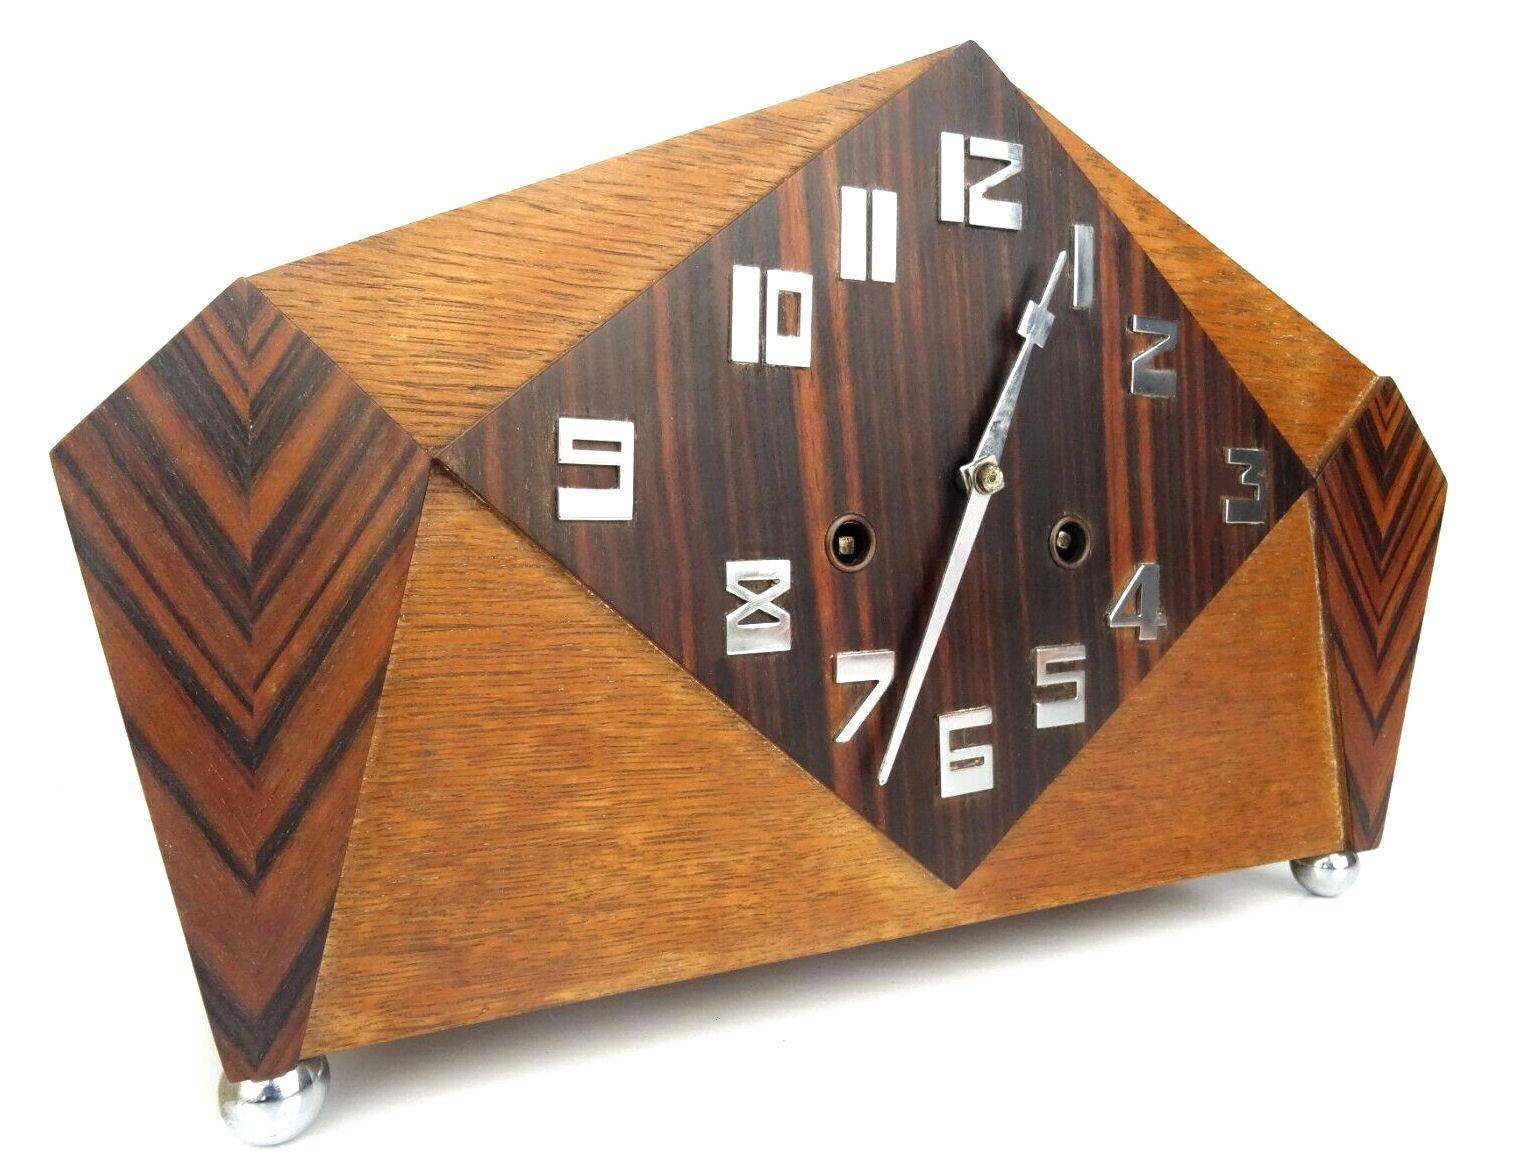 Bauhaus Art Deco Eight Day Mantel Chiming Clock by Pfeilkreuz Junghans, c1930 For Sale